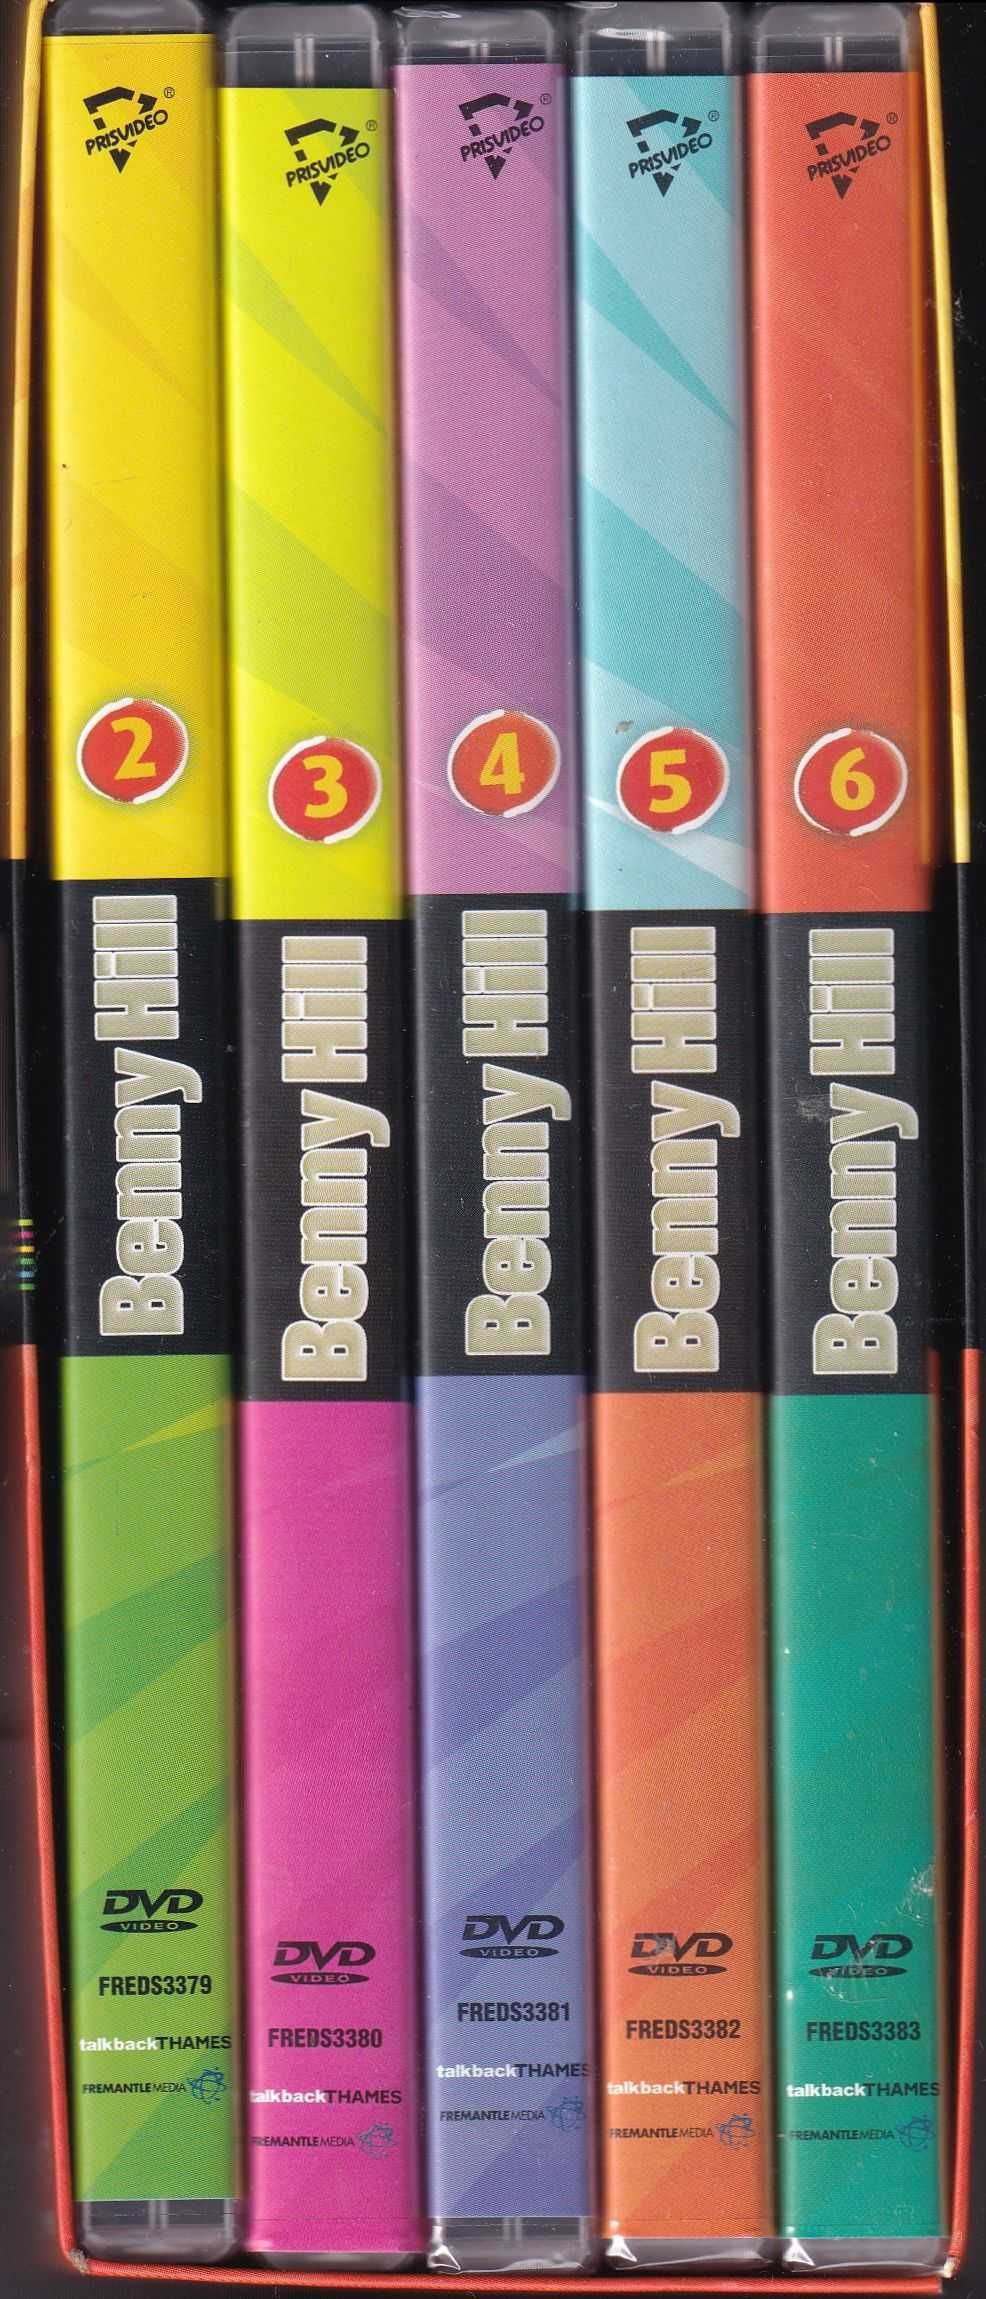 Benny Hill (5 DVDs Hilariantes)